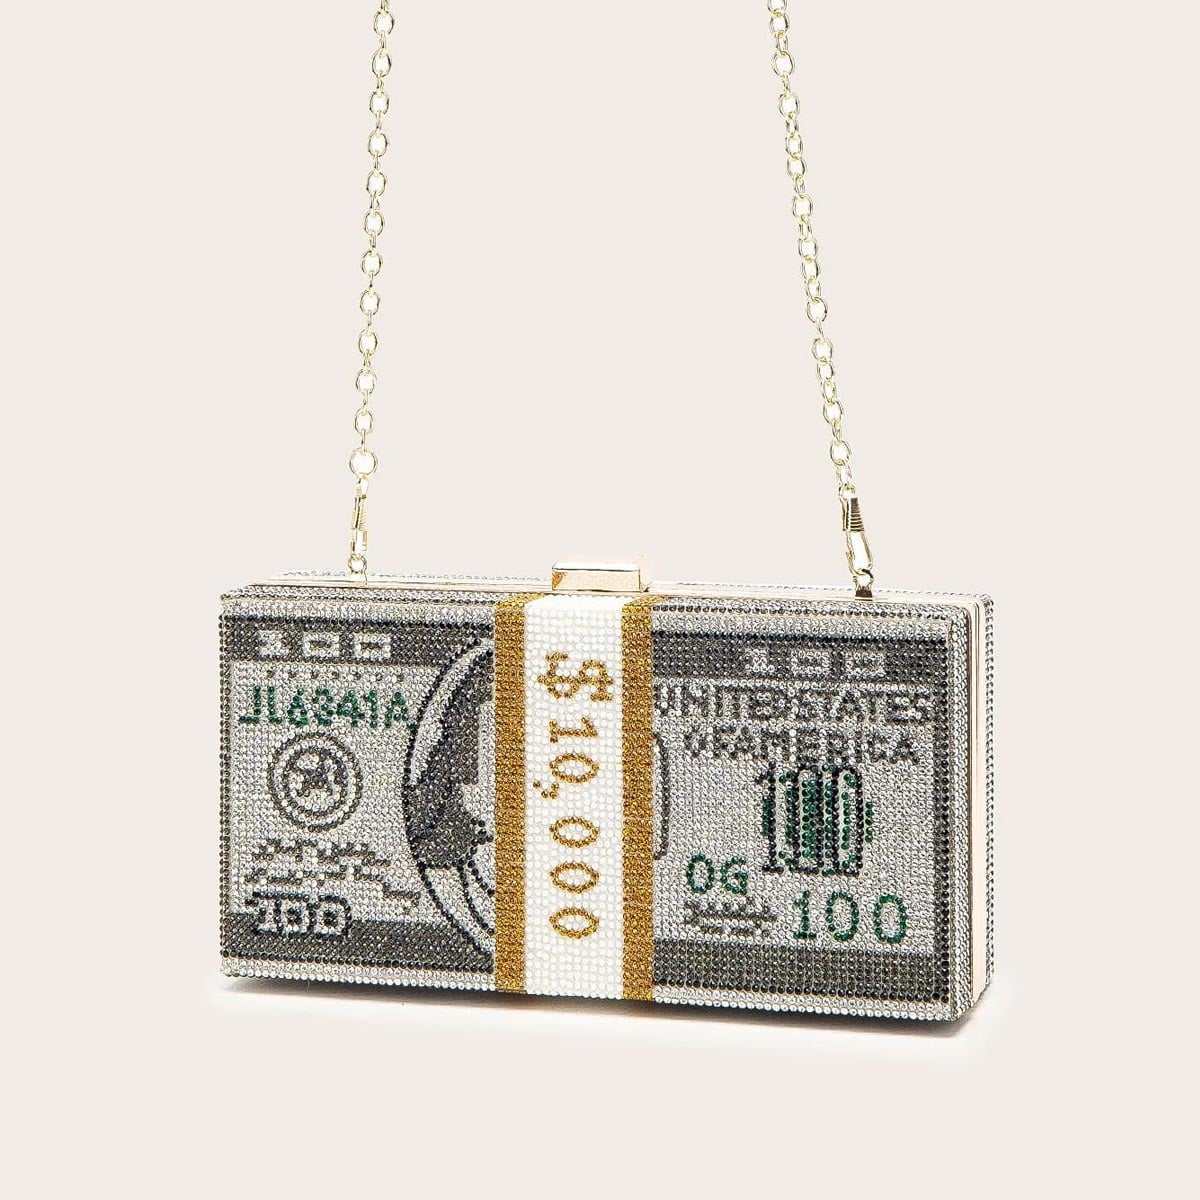 Cash Money $100 Dollars Money Bag Crystals Handbag